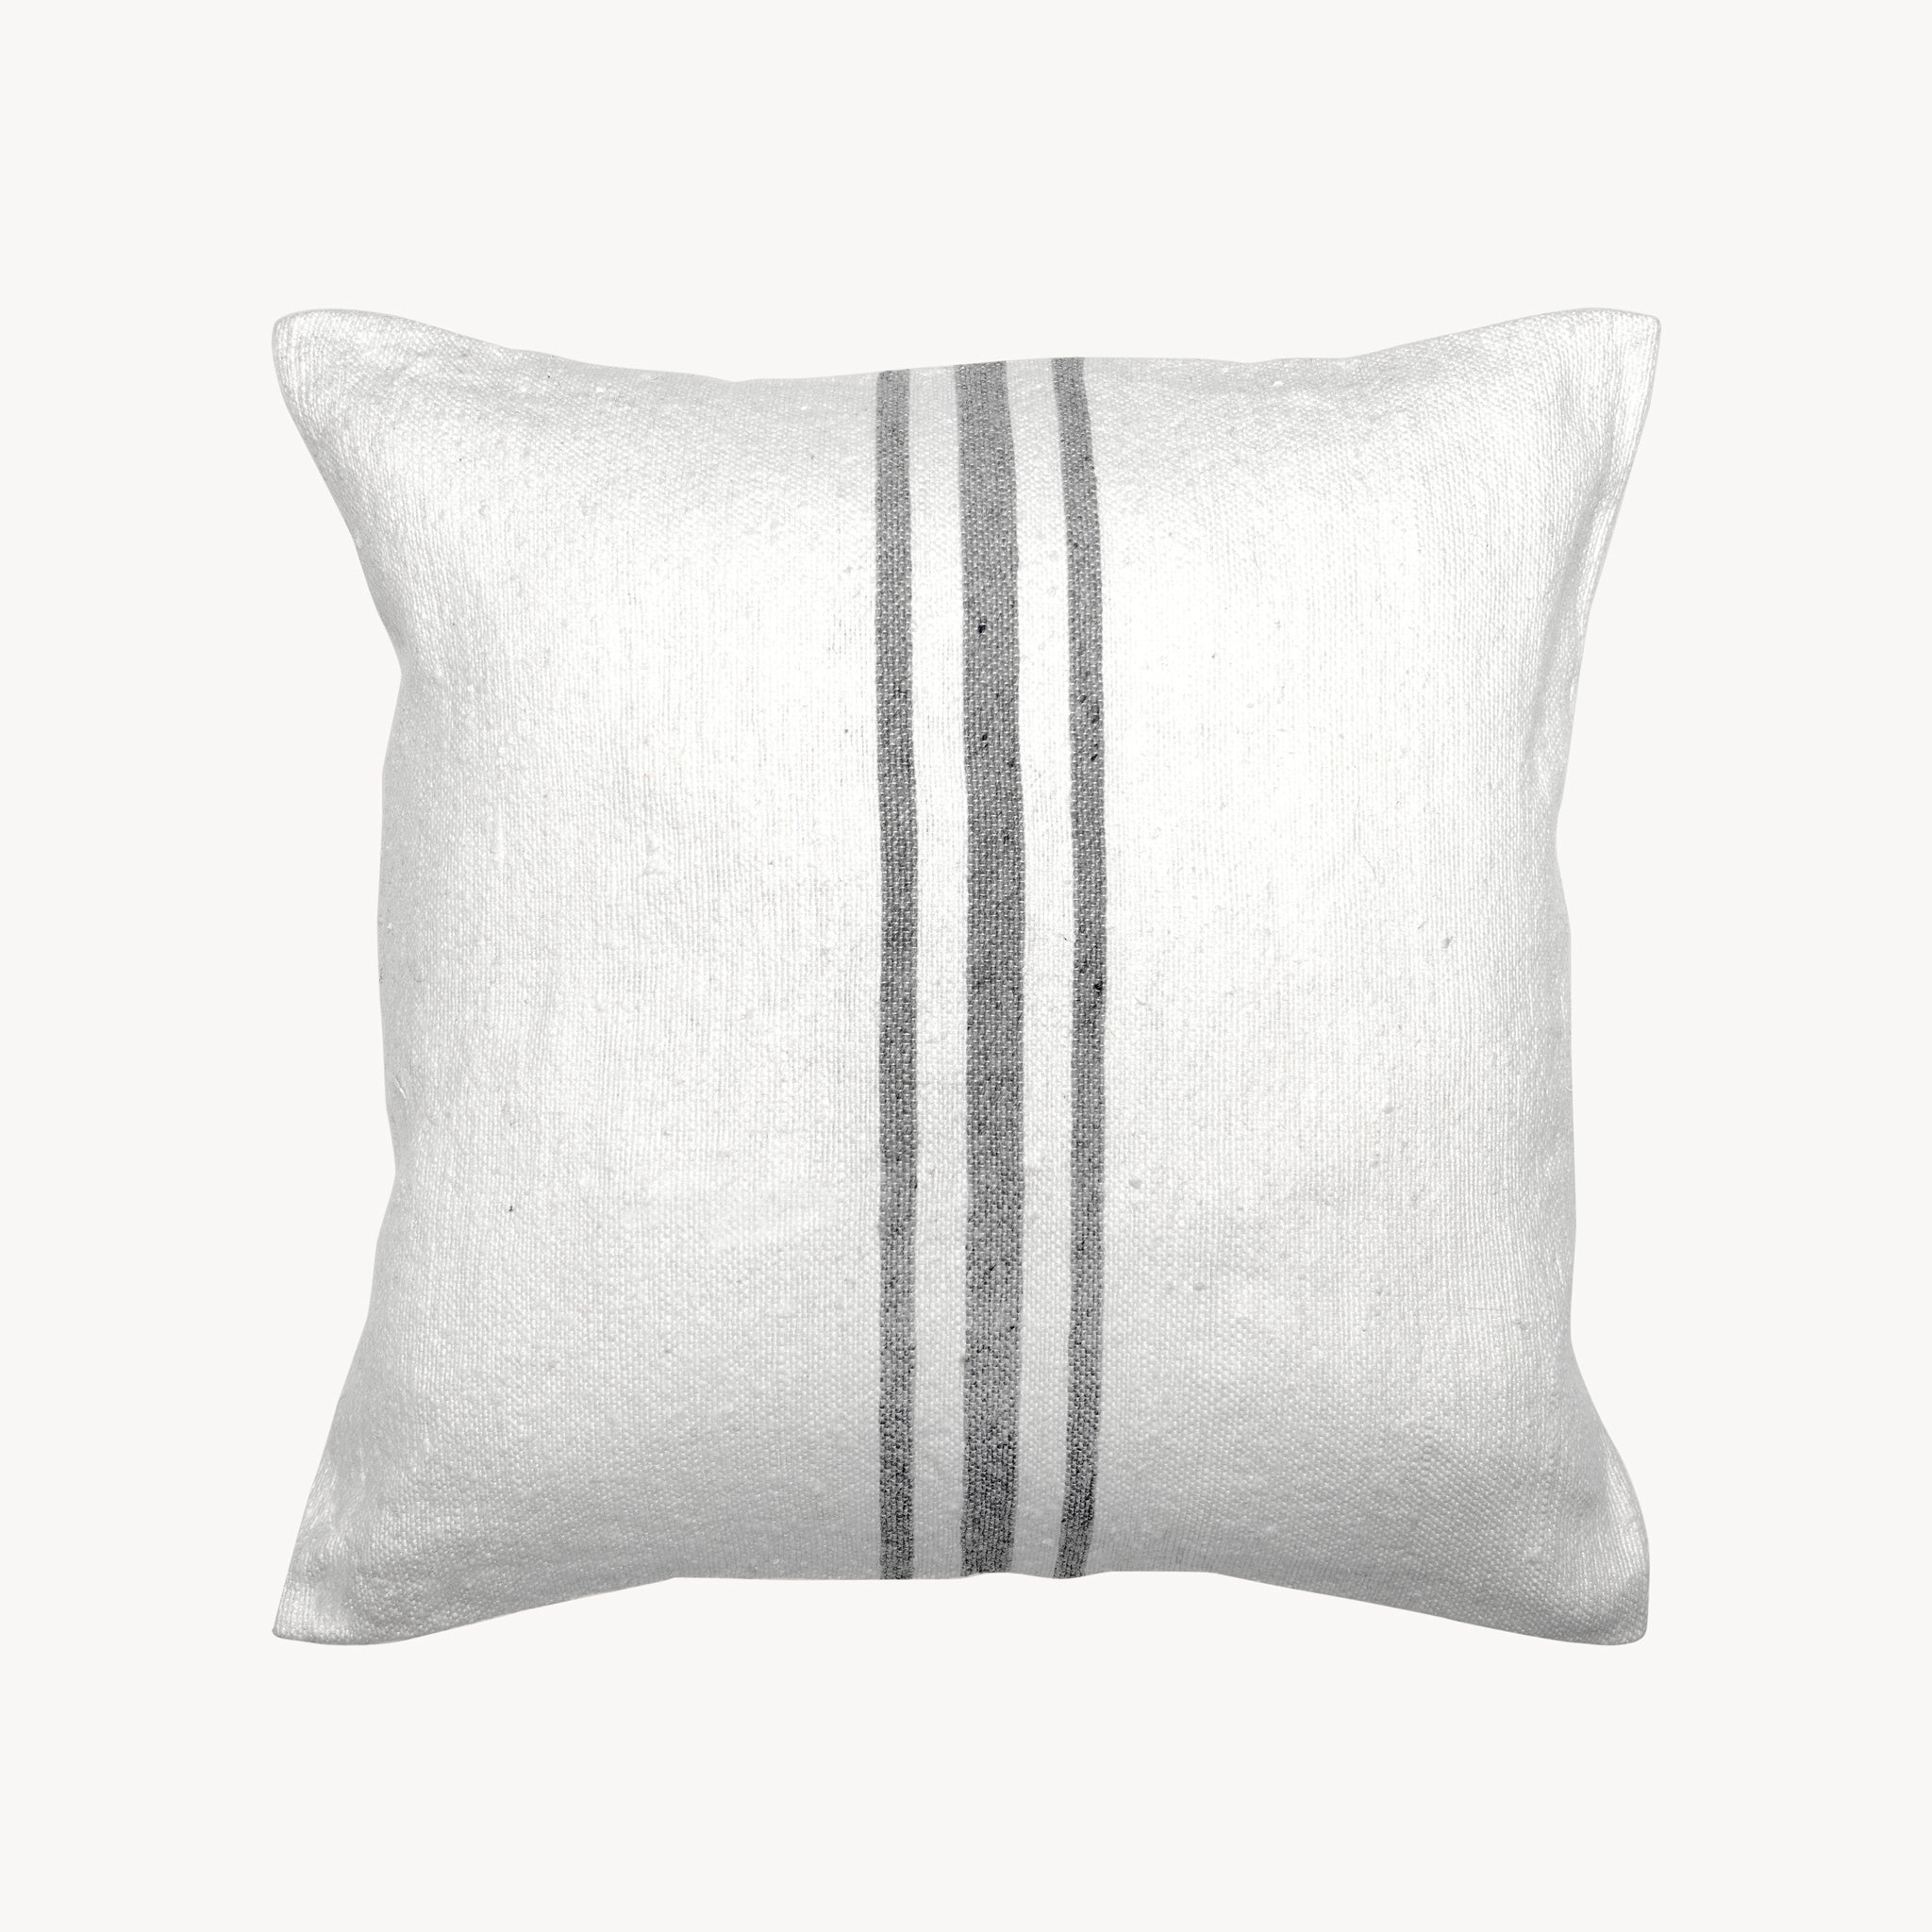 Middle Stripe Light Grey Pillow - 18x18"